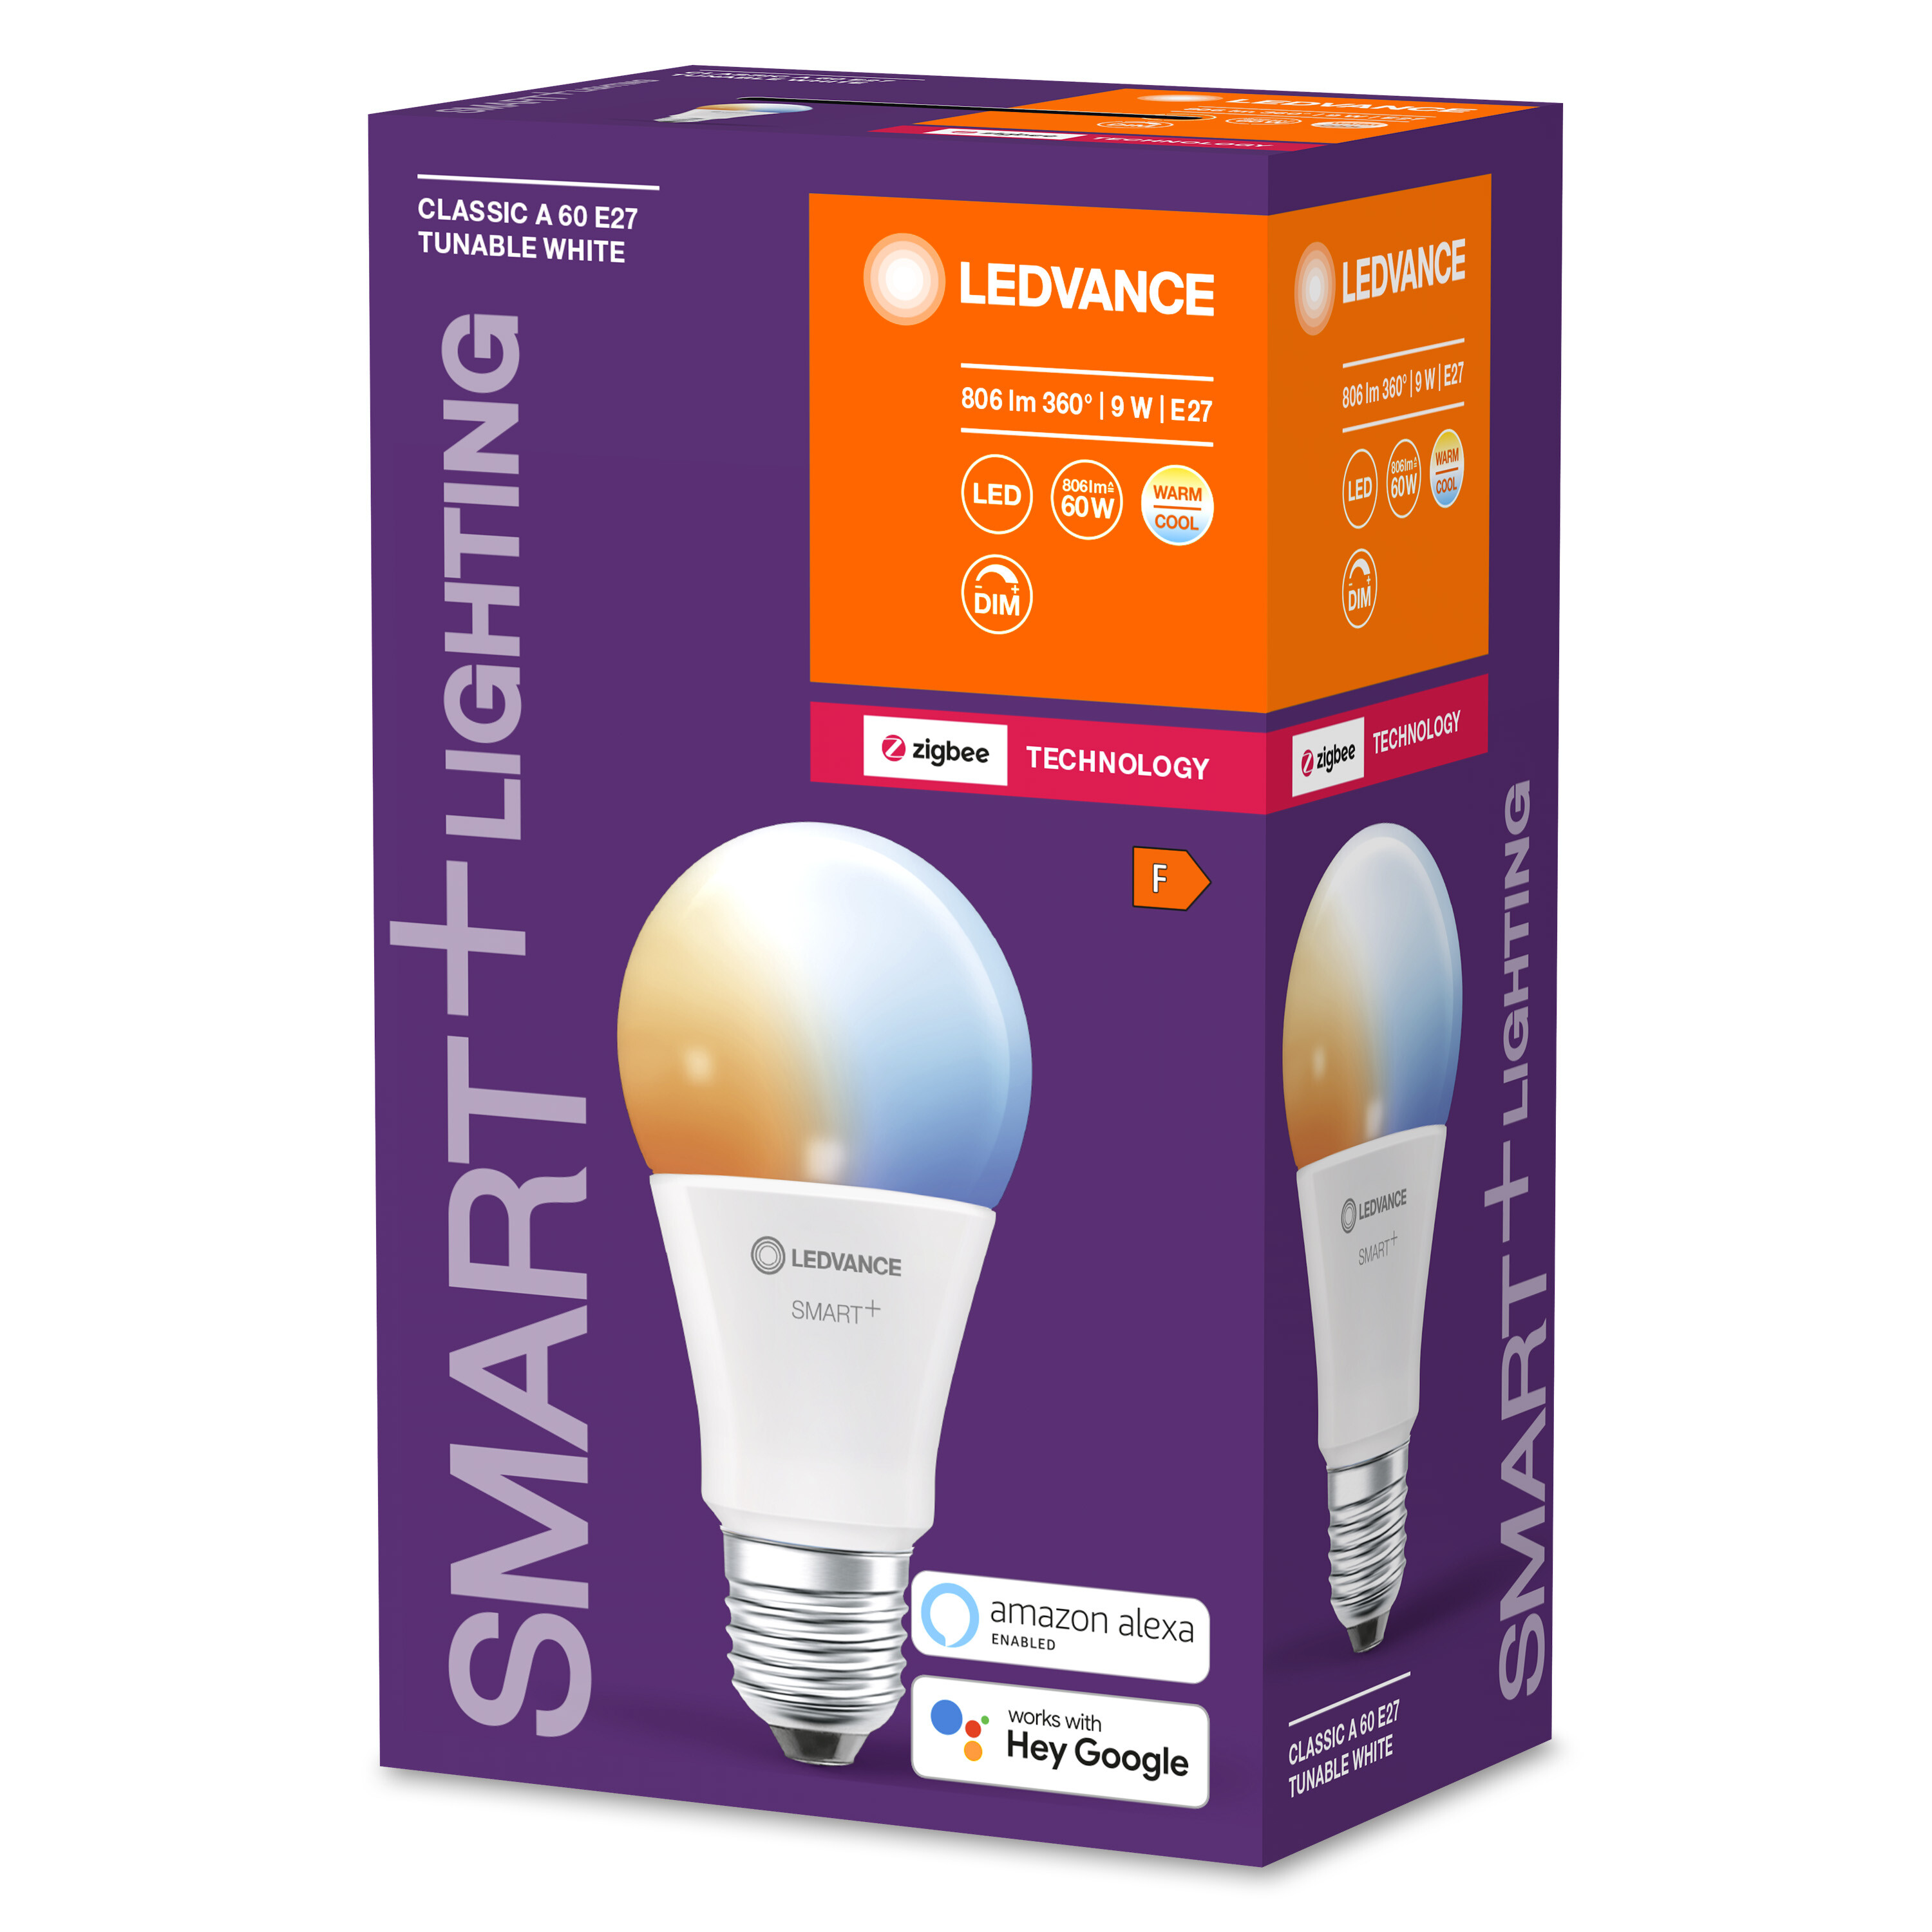 LEDVANCE SMART+ Classic Lichtfarbe White änderbar LED Lampe Tunable